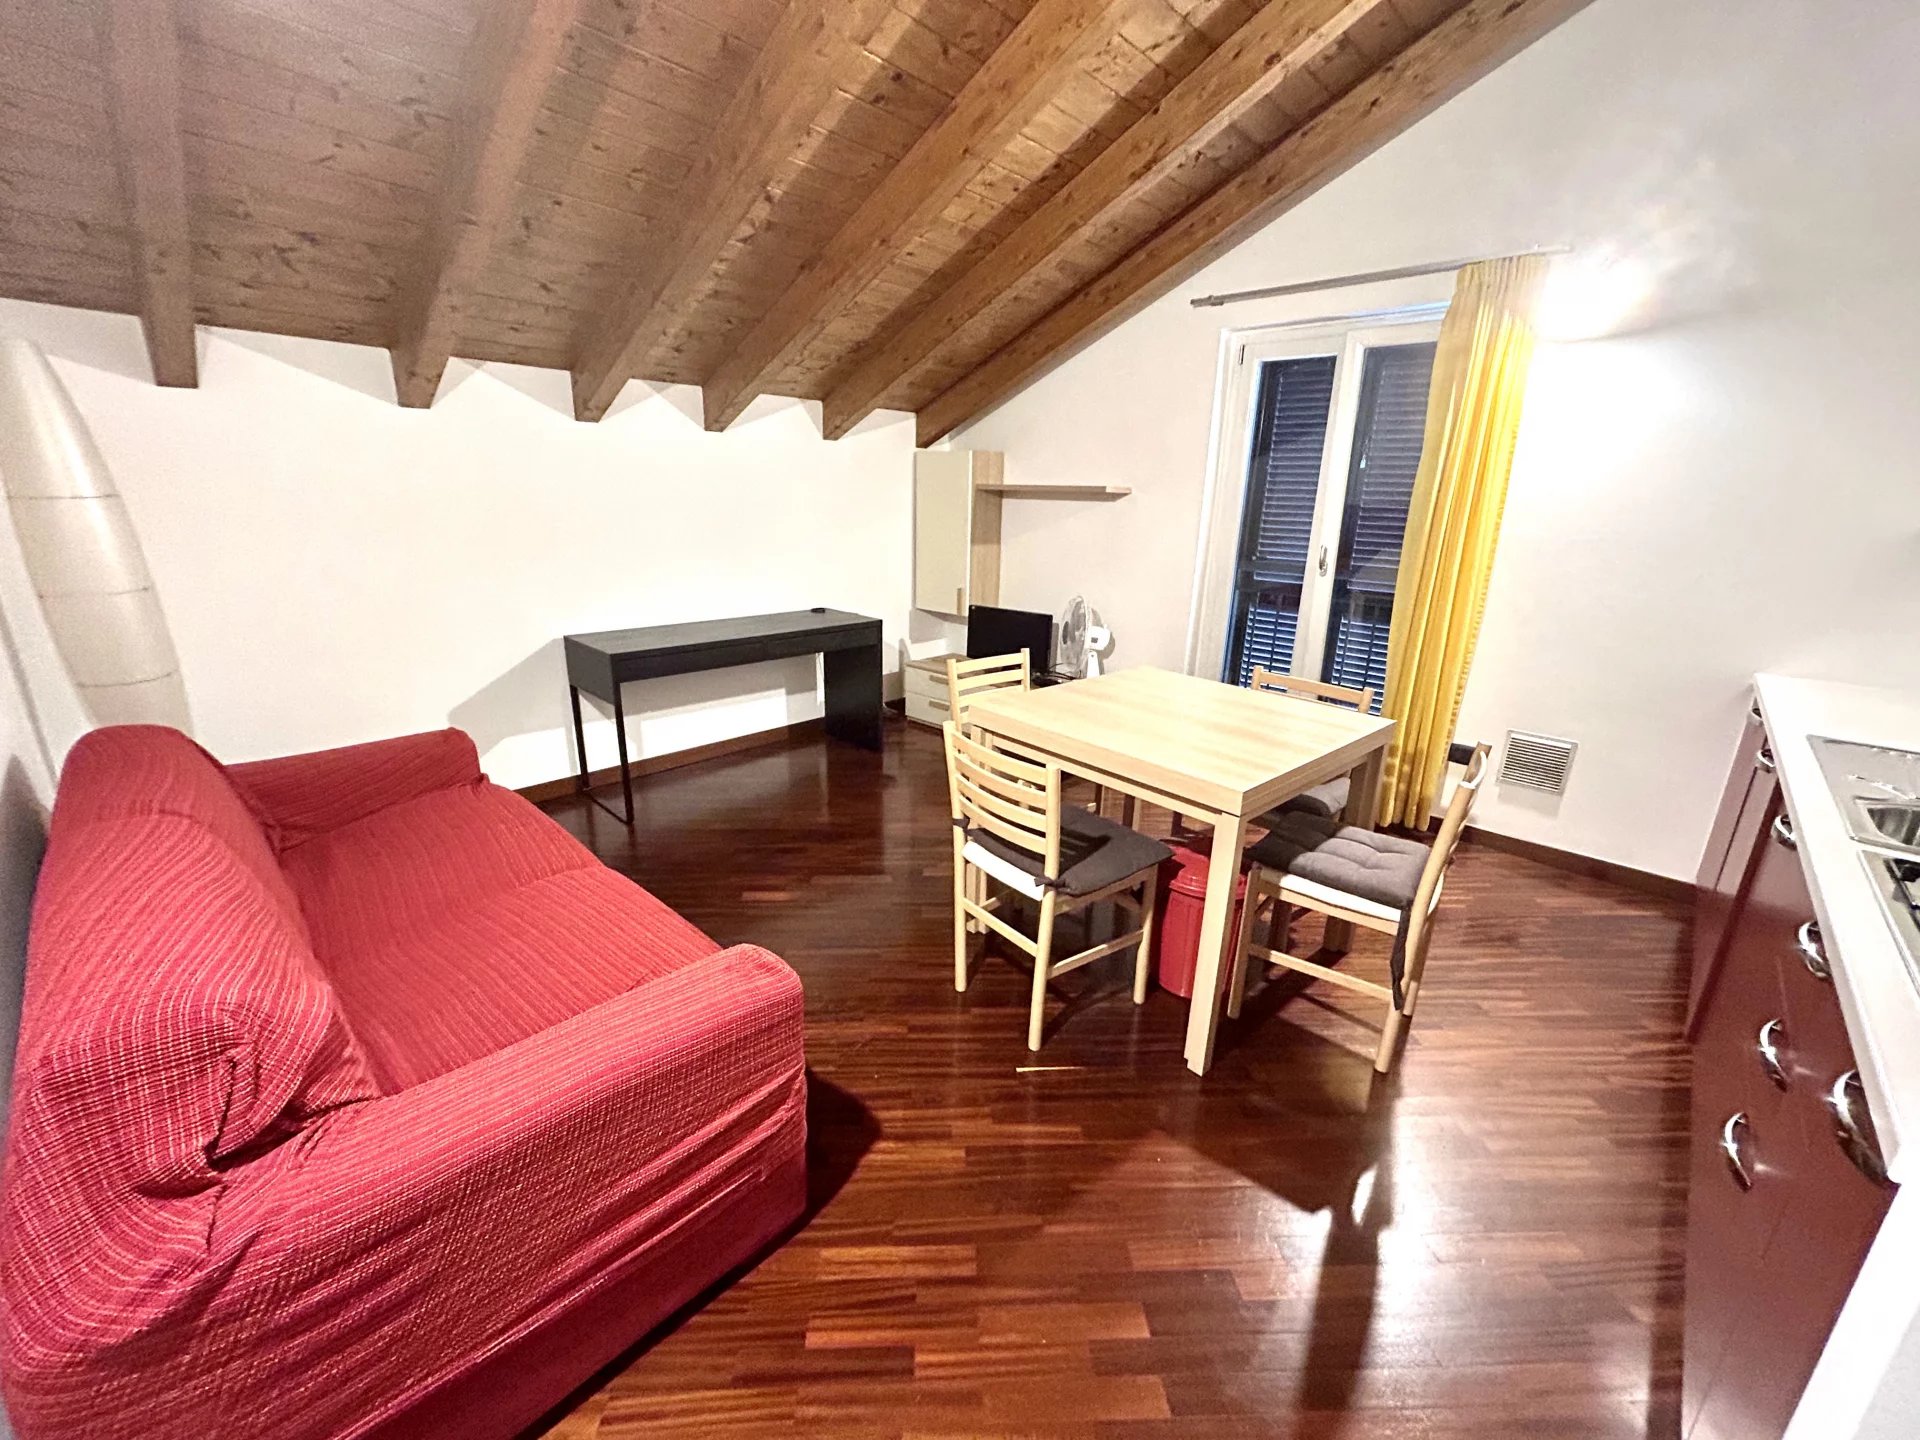 Rental Apartment - Como - Italy